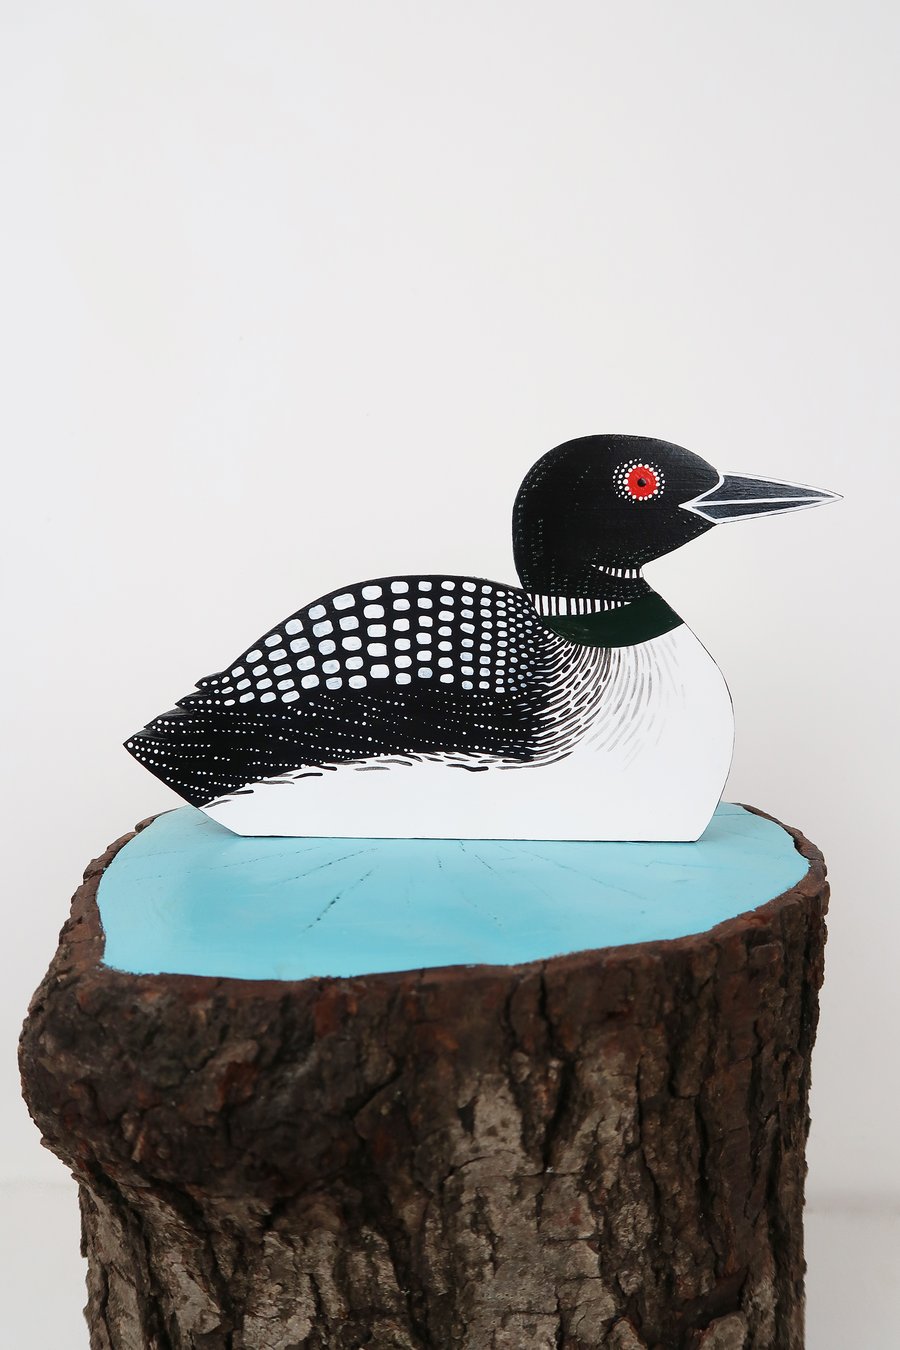 Loon ornament, hand painted wooden diver bird art, water bird decoration.